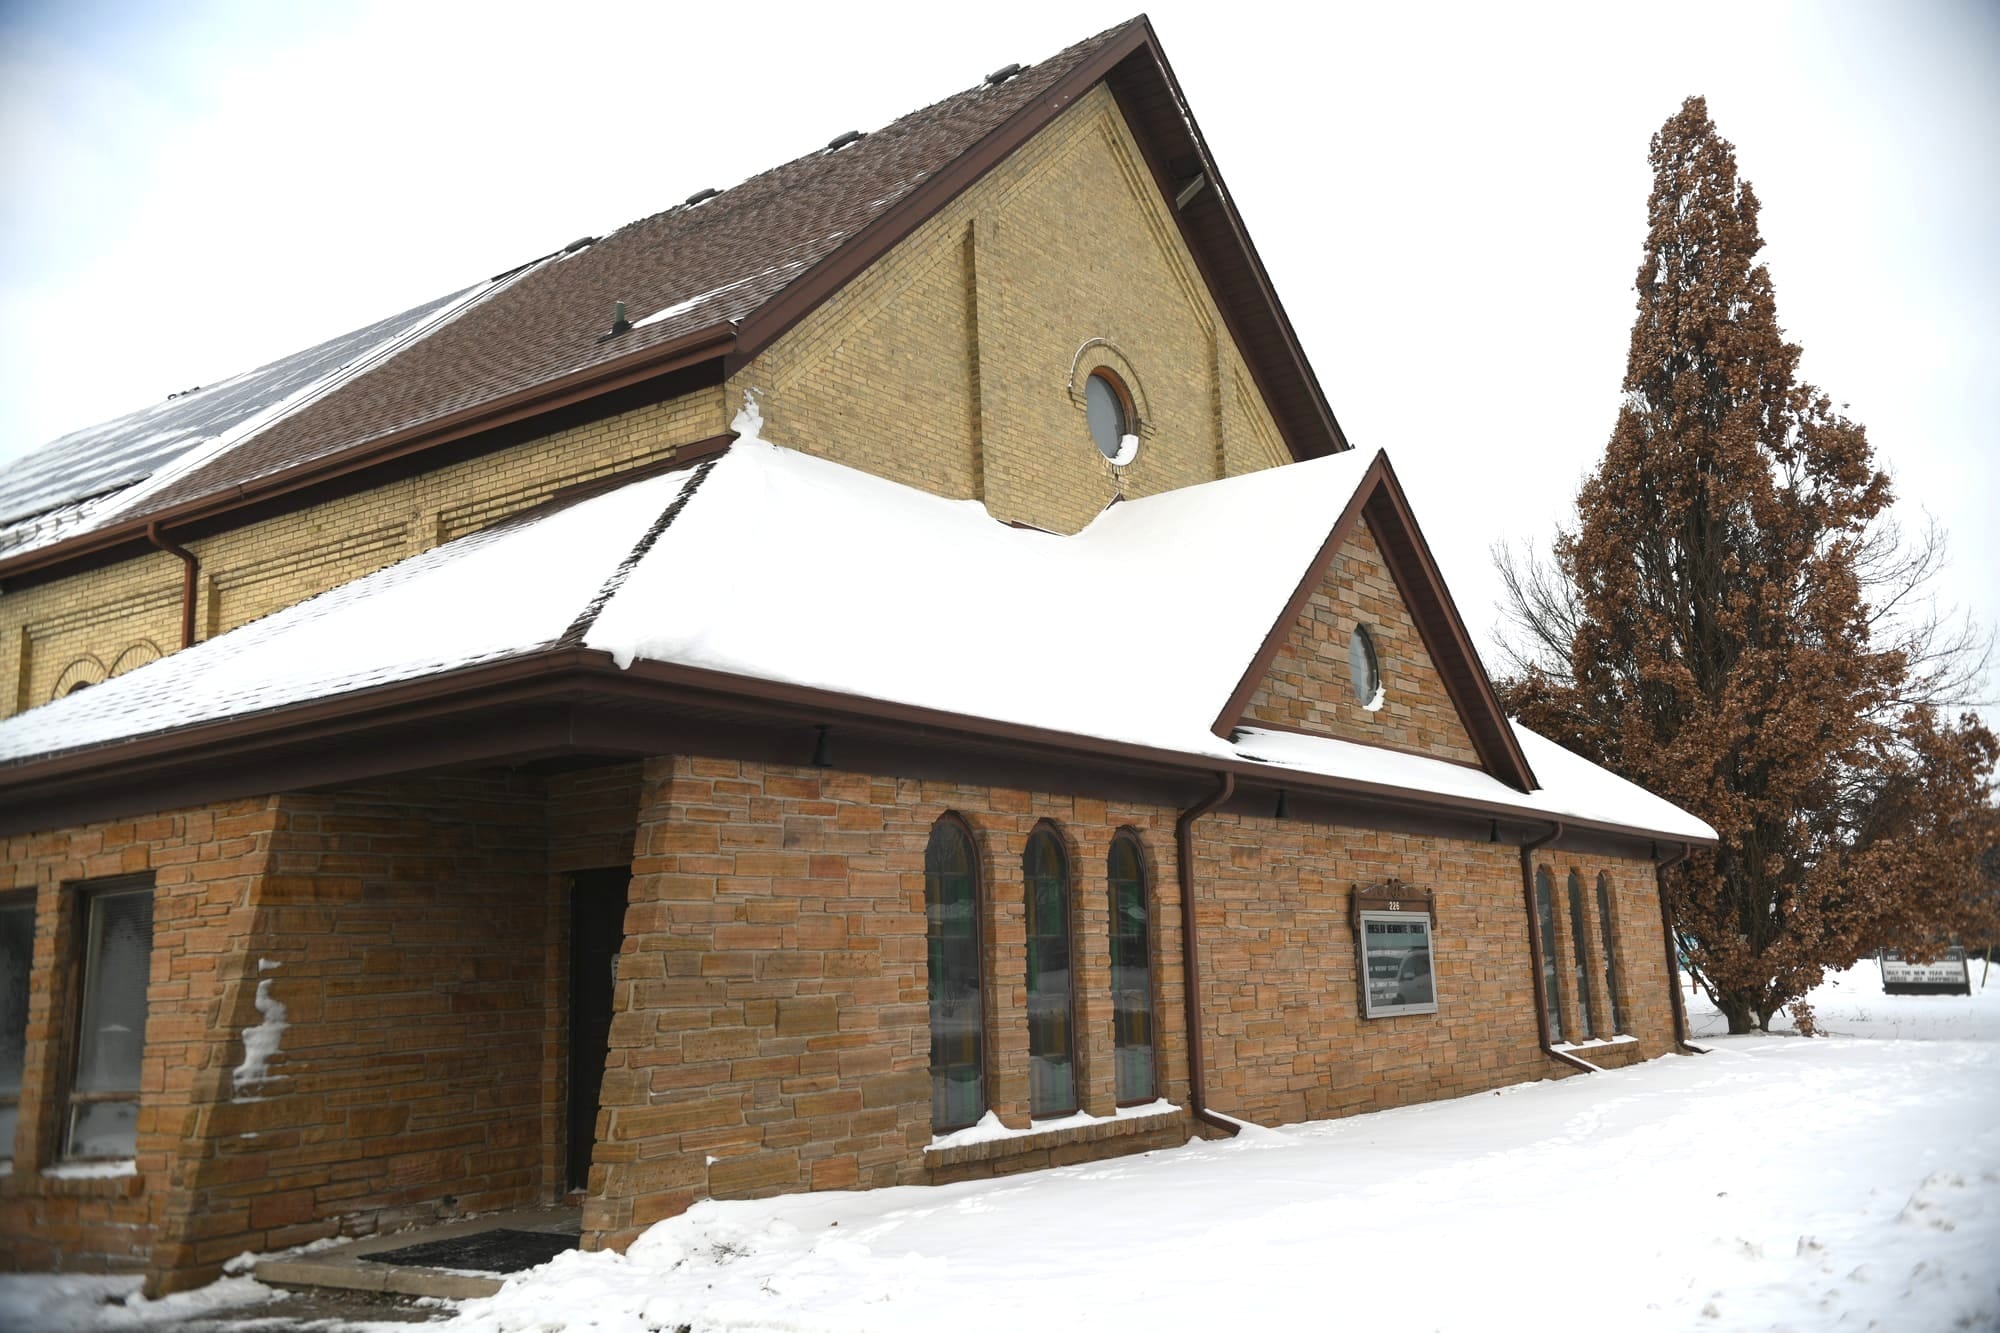 Breslau church surveying public about broader community uses